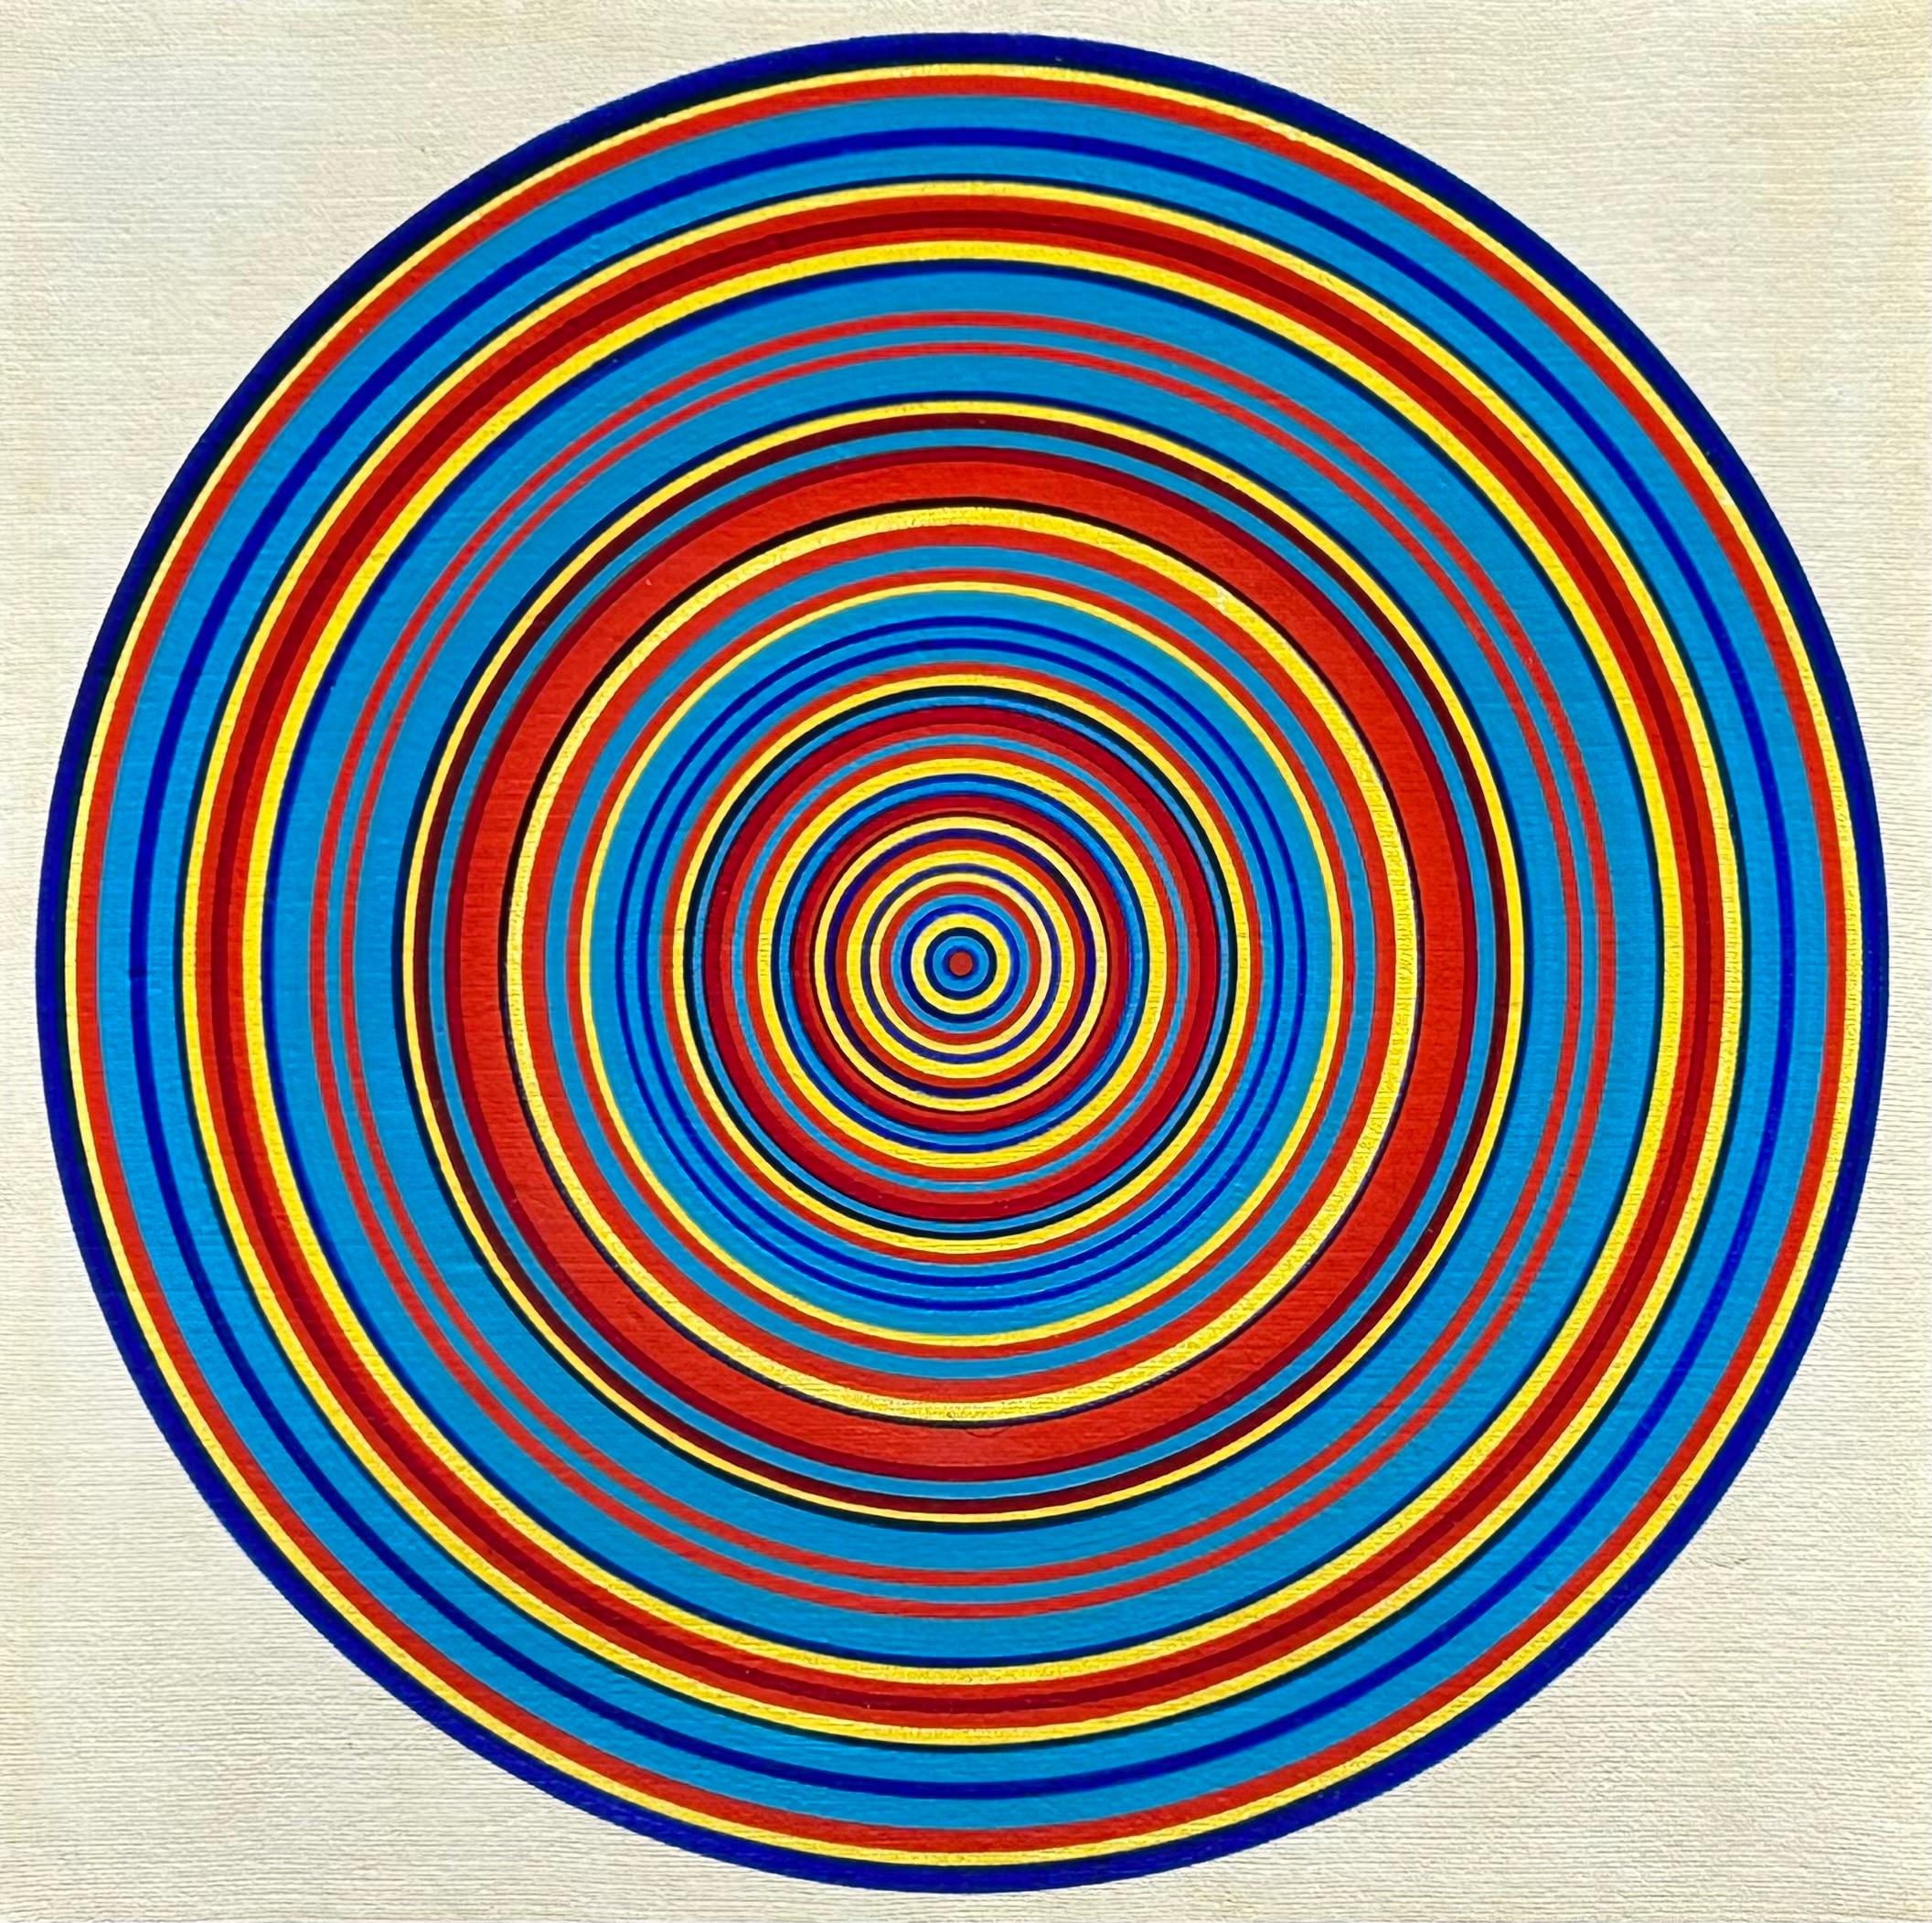 Tadasky / Tadasuke Kuwayama Abstract Painting - "#B-119" Tadasky, Op-Art, Psychadelic Illusion Pattern, Concurrent Circles